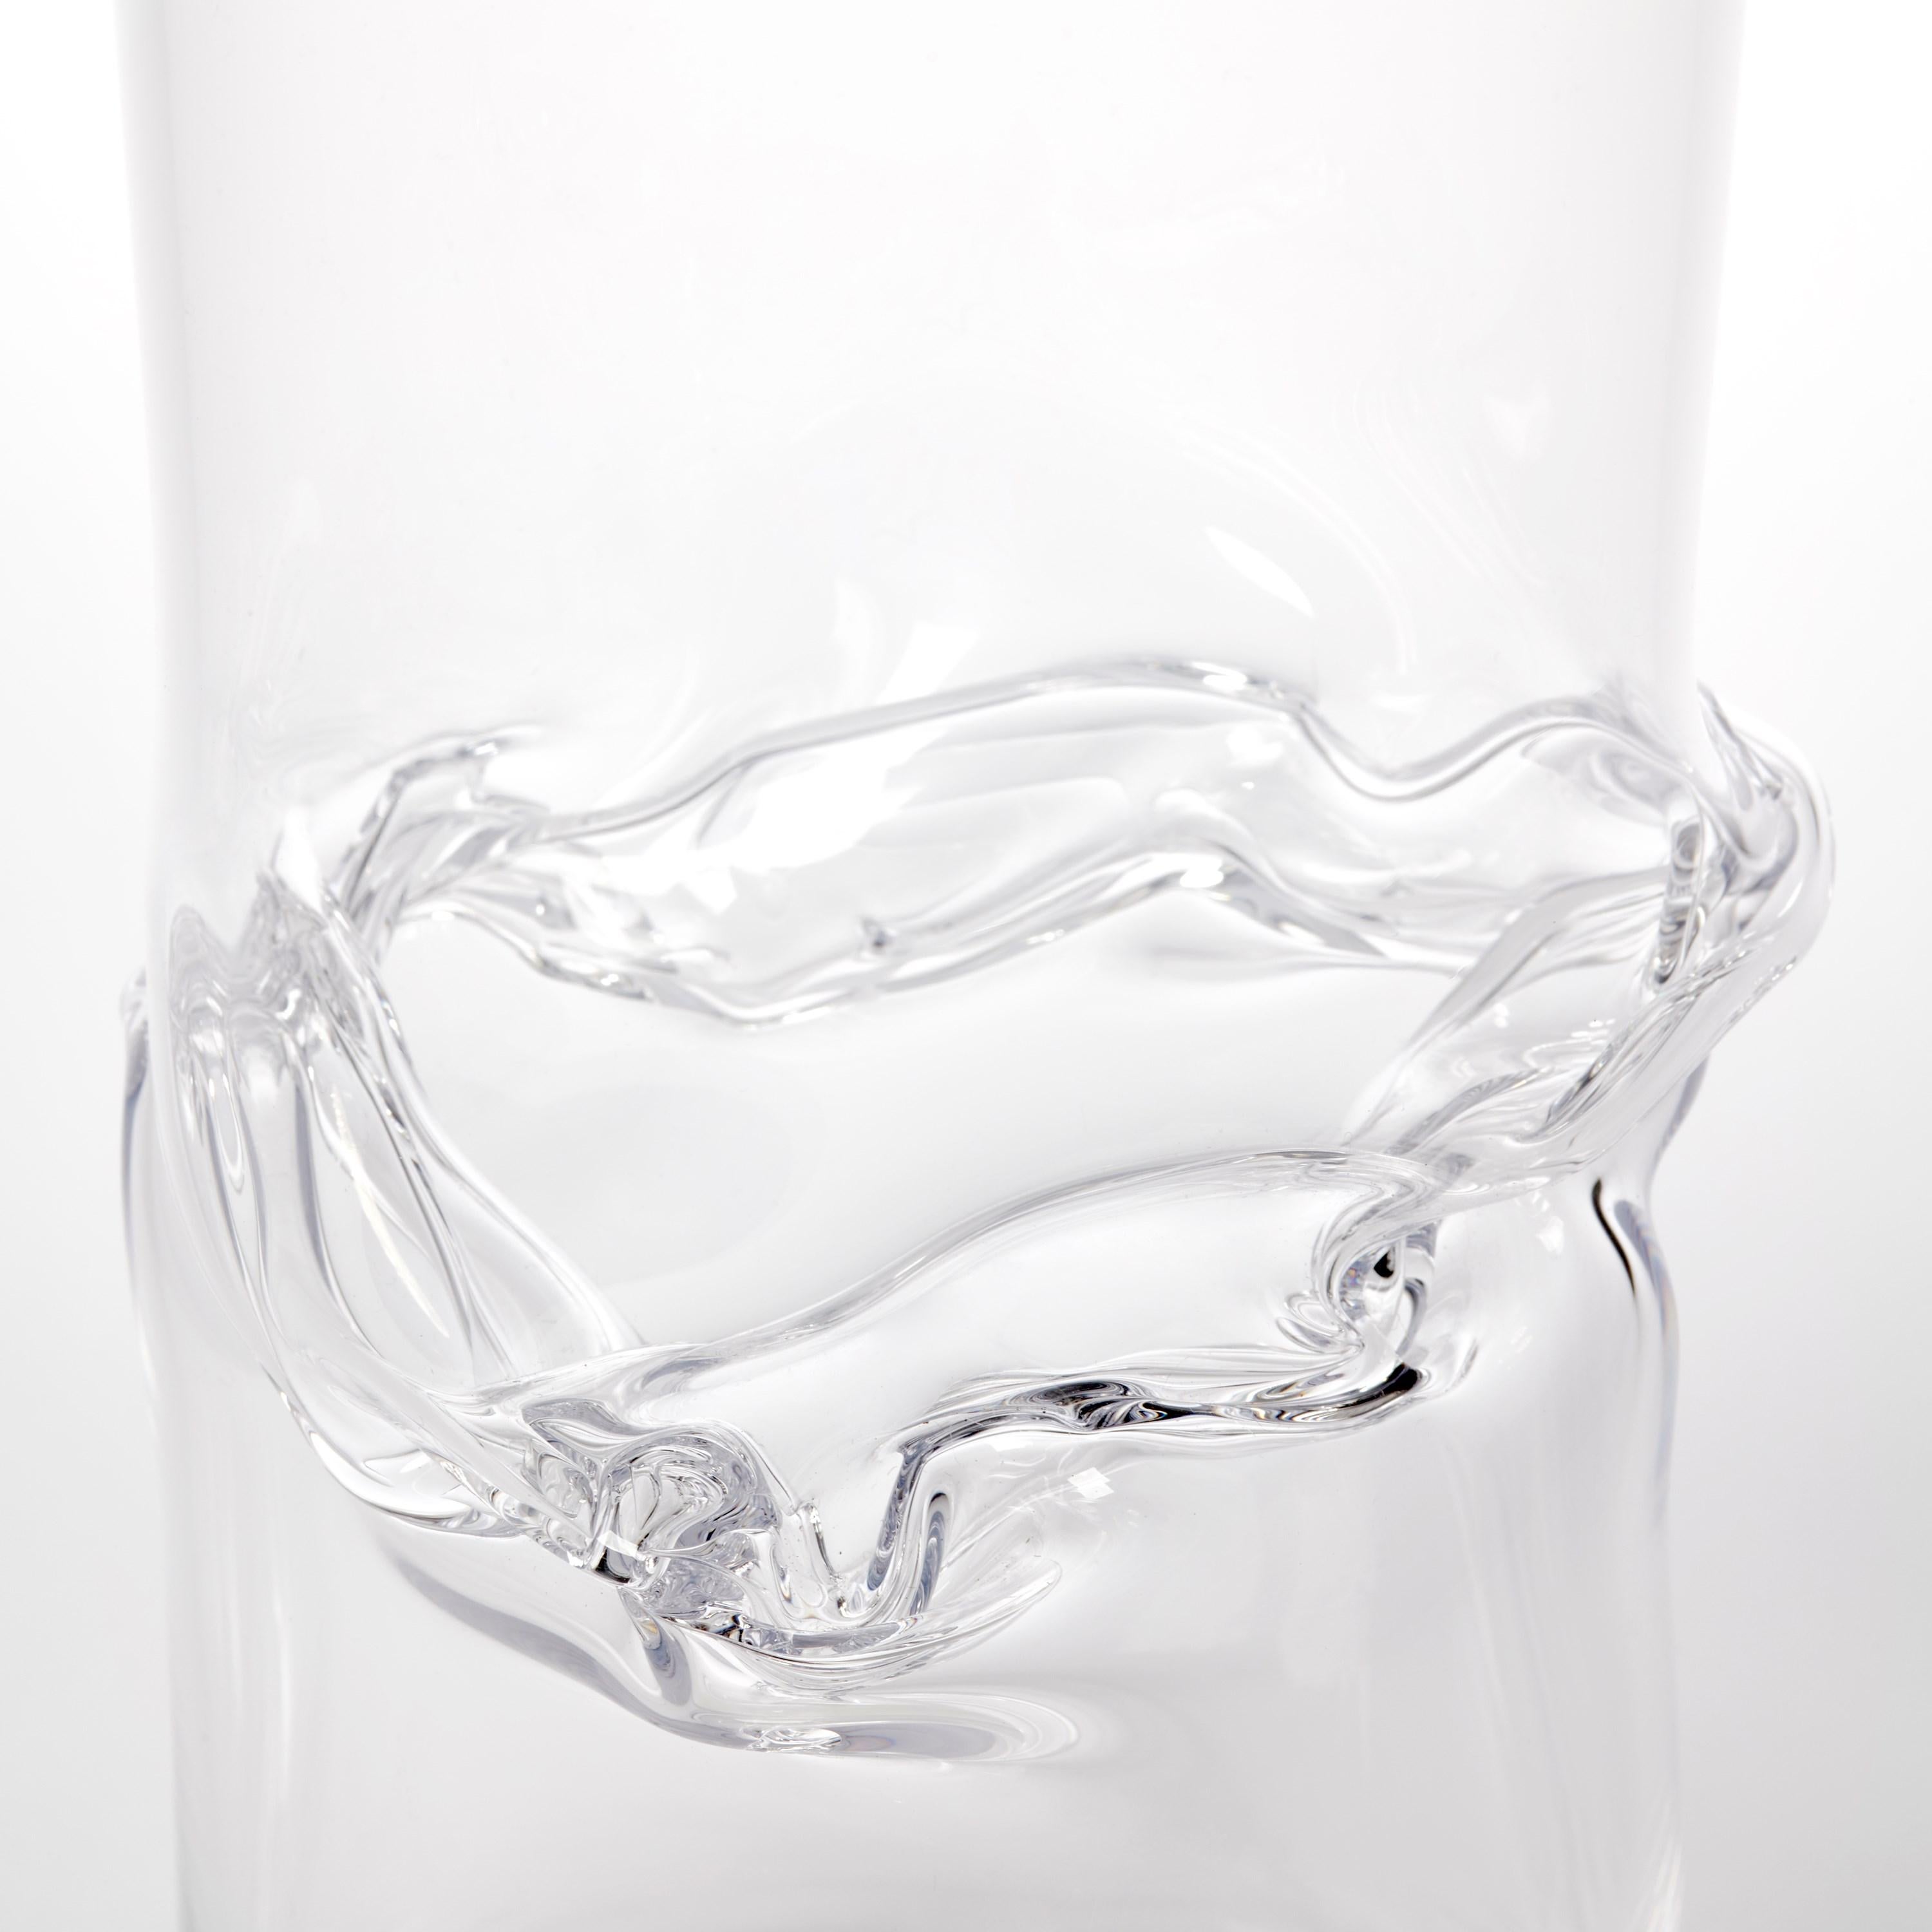 Organic Modern Torsion in Opal White 23/02, sculptural handblown glass vessel by Emma Baker For Sale